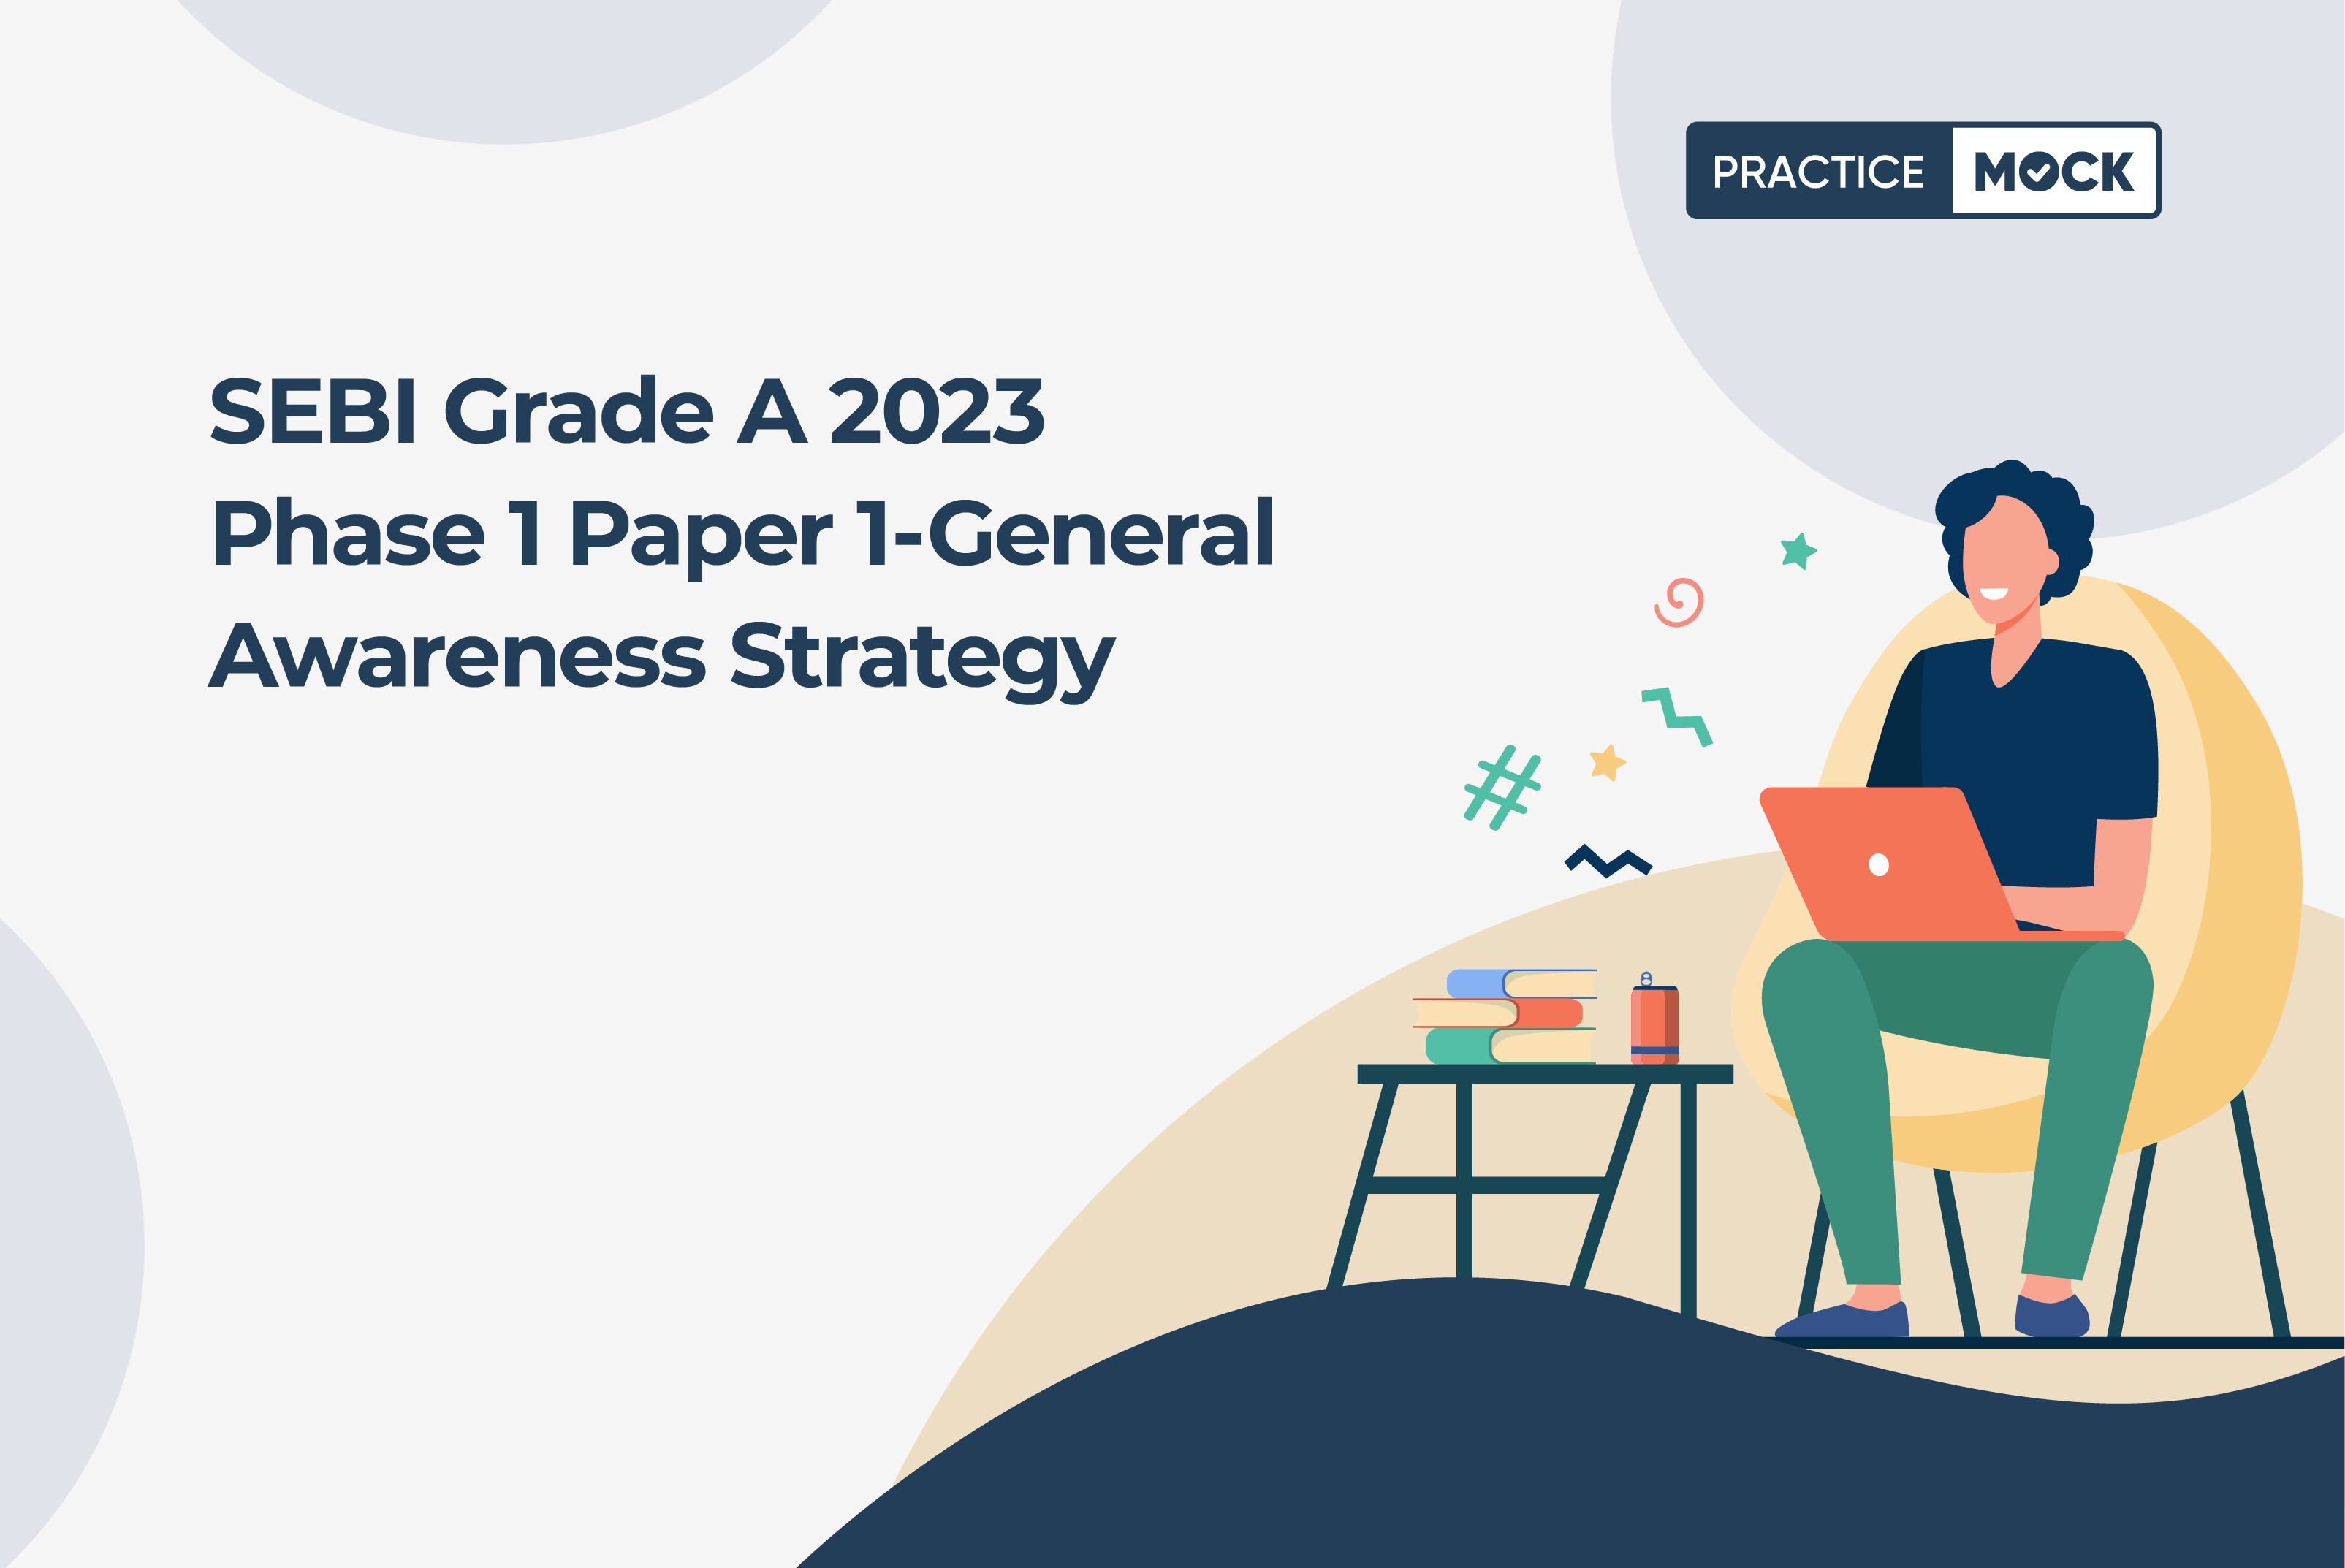 SEBI Grade A Phase 1 Paper 1-General Awareness Strategy